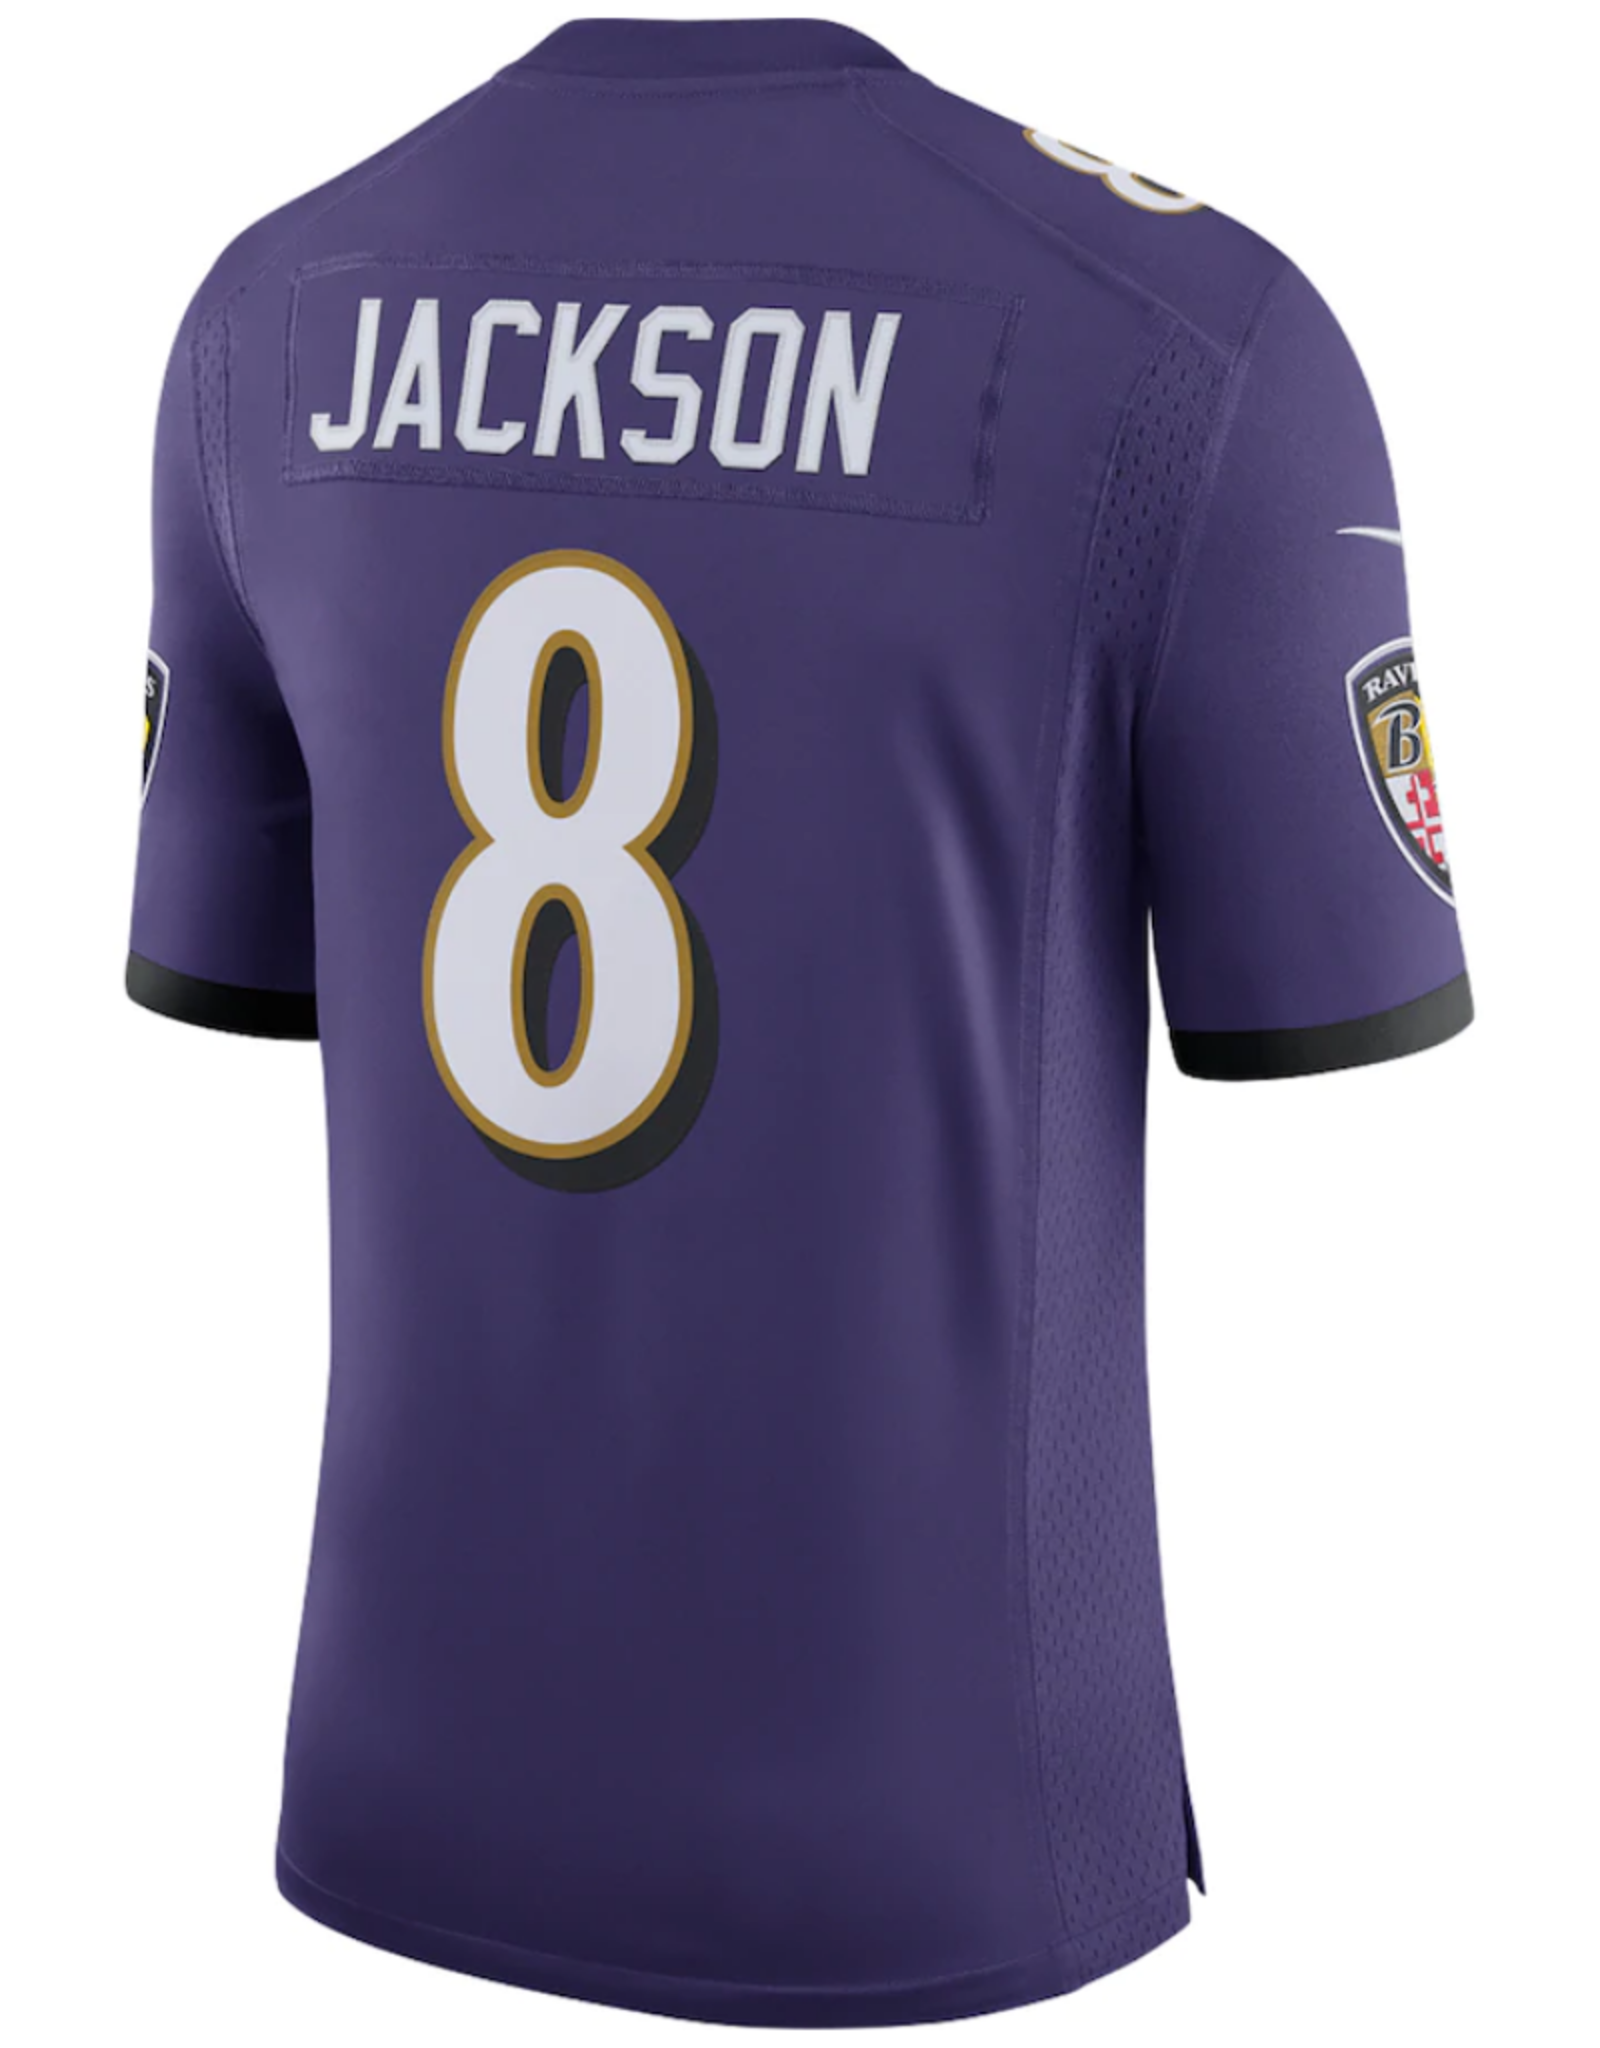 Nike Men's Limited Jackson #8 Jersey Baltimore Ravens Purple